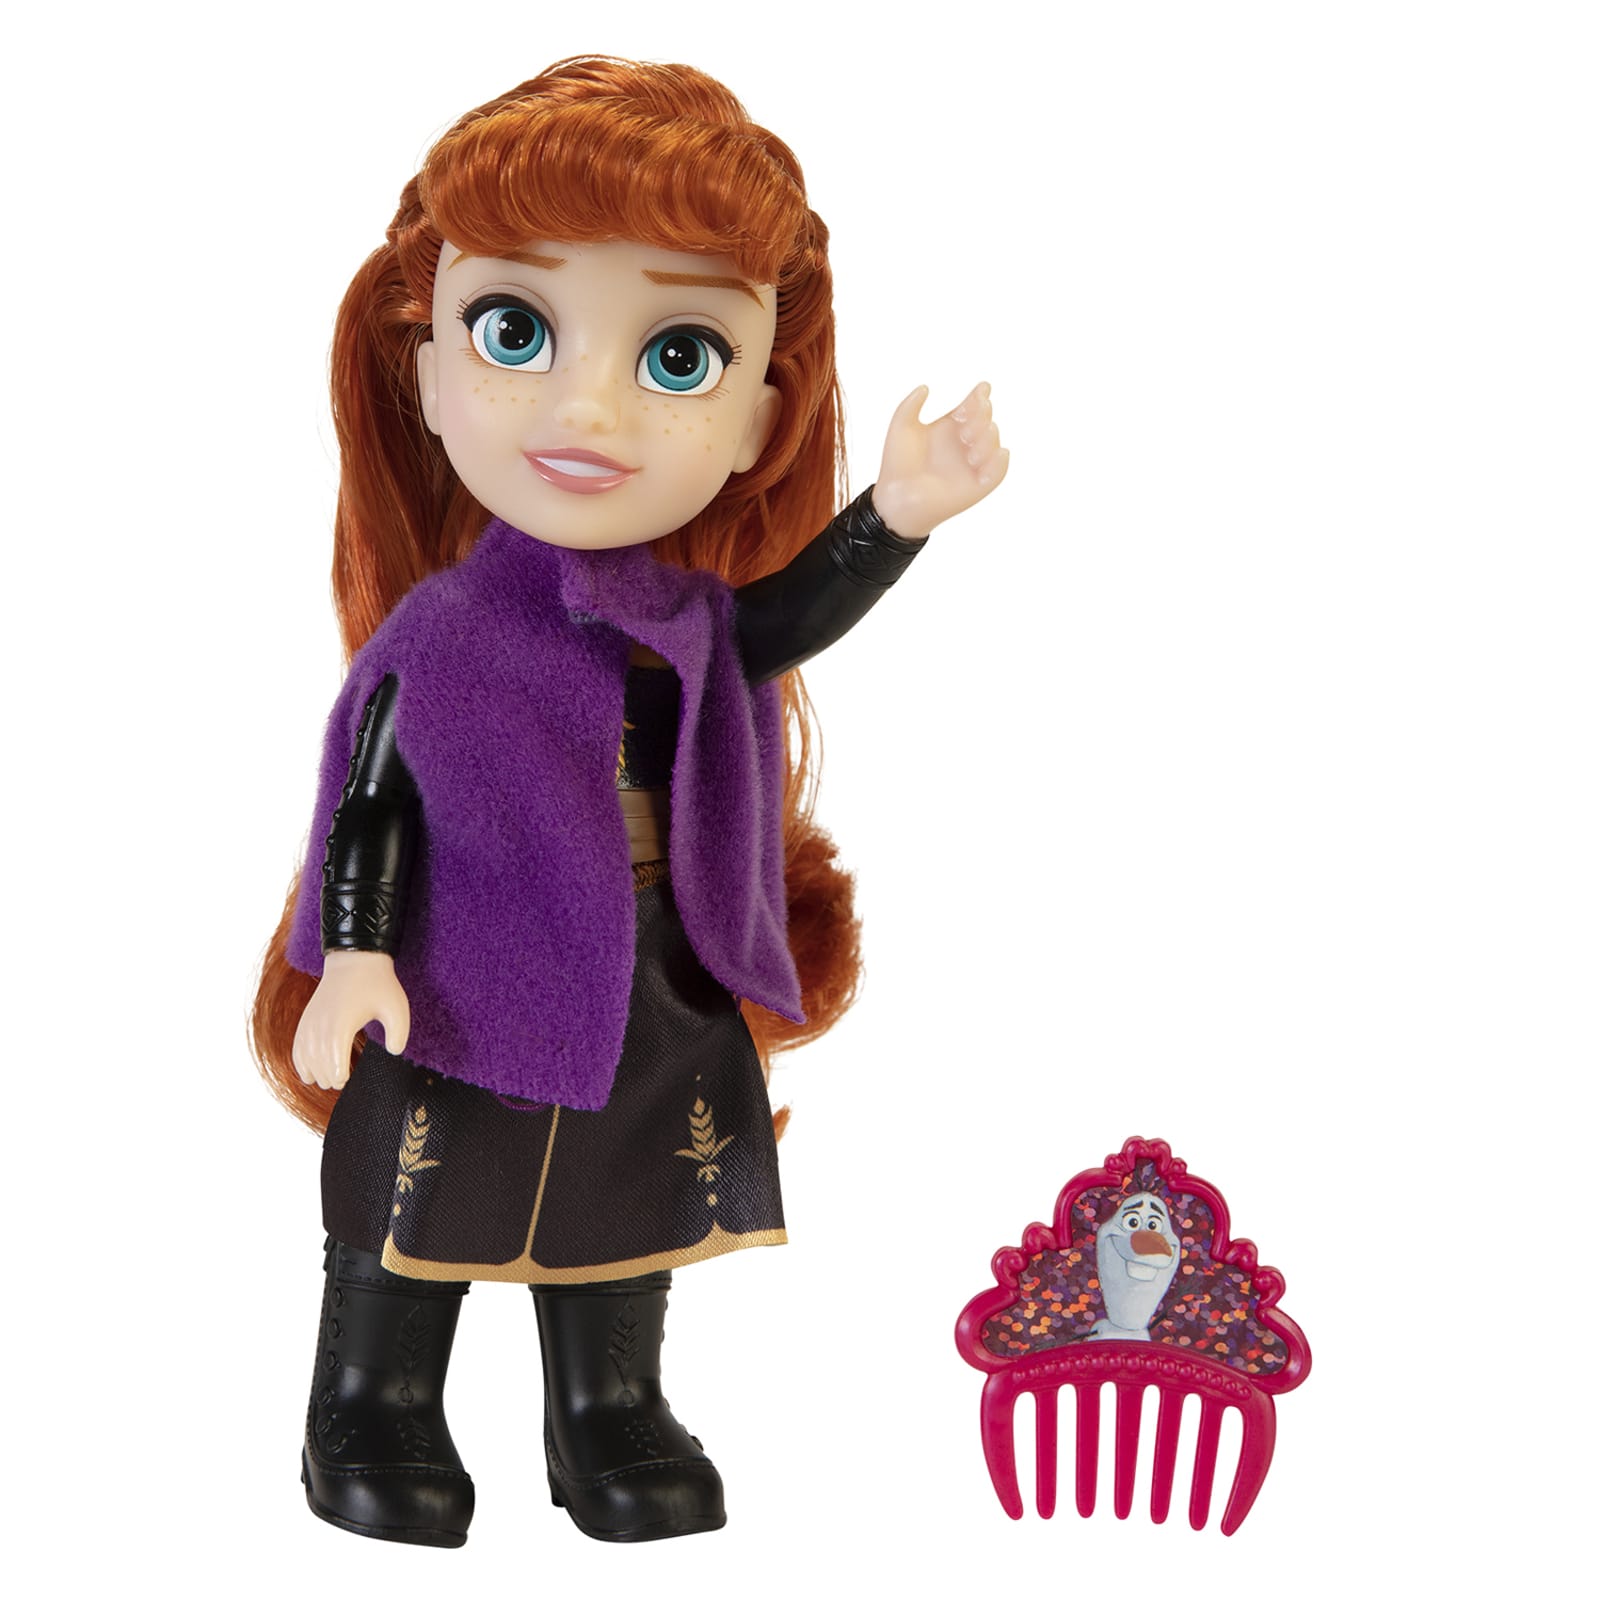 Frozen 2 Petite Adventure Elsa Doll & Petite Adventure Anna Doll